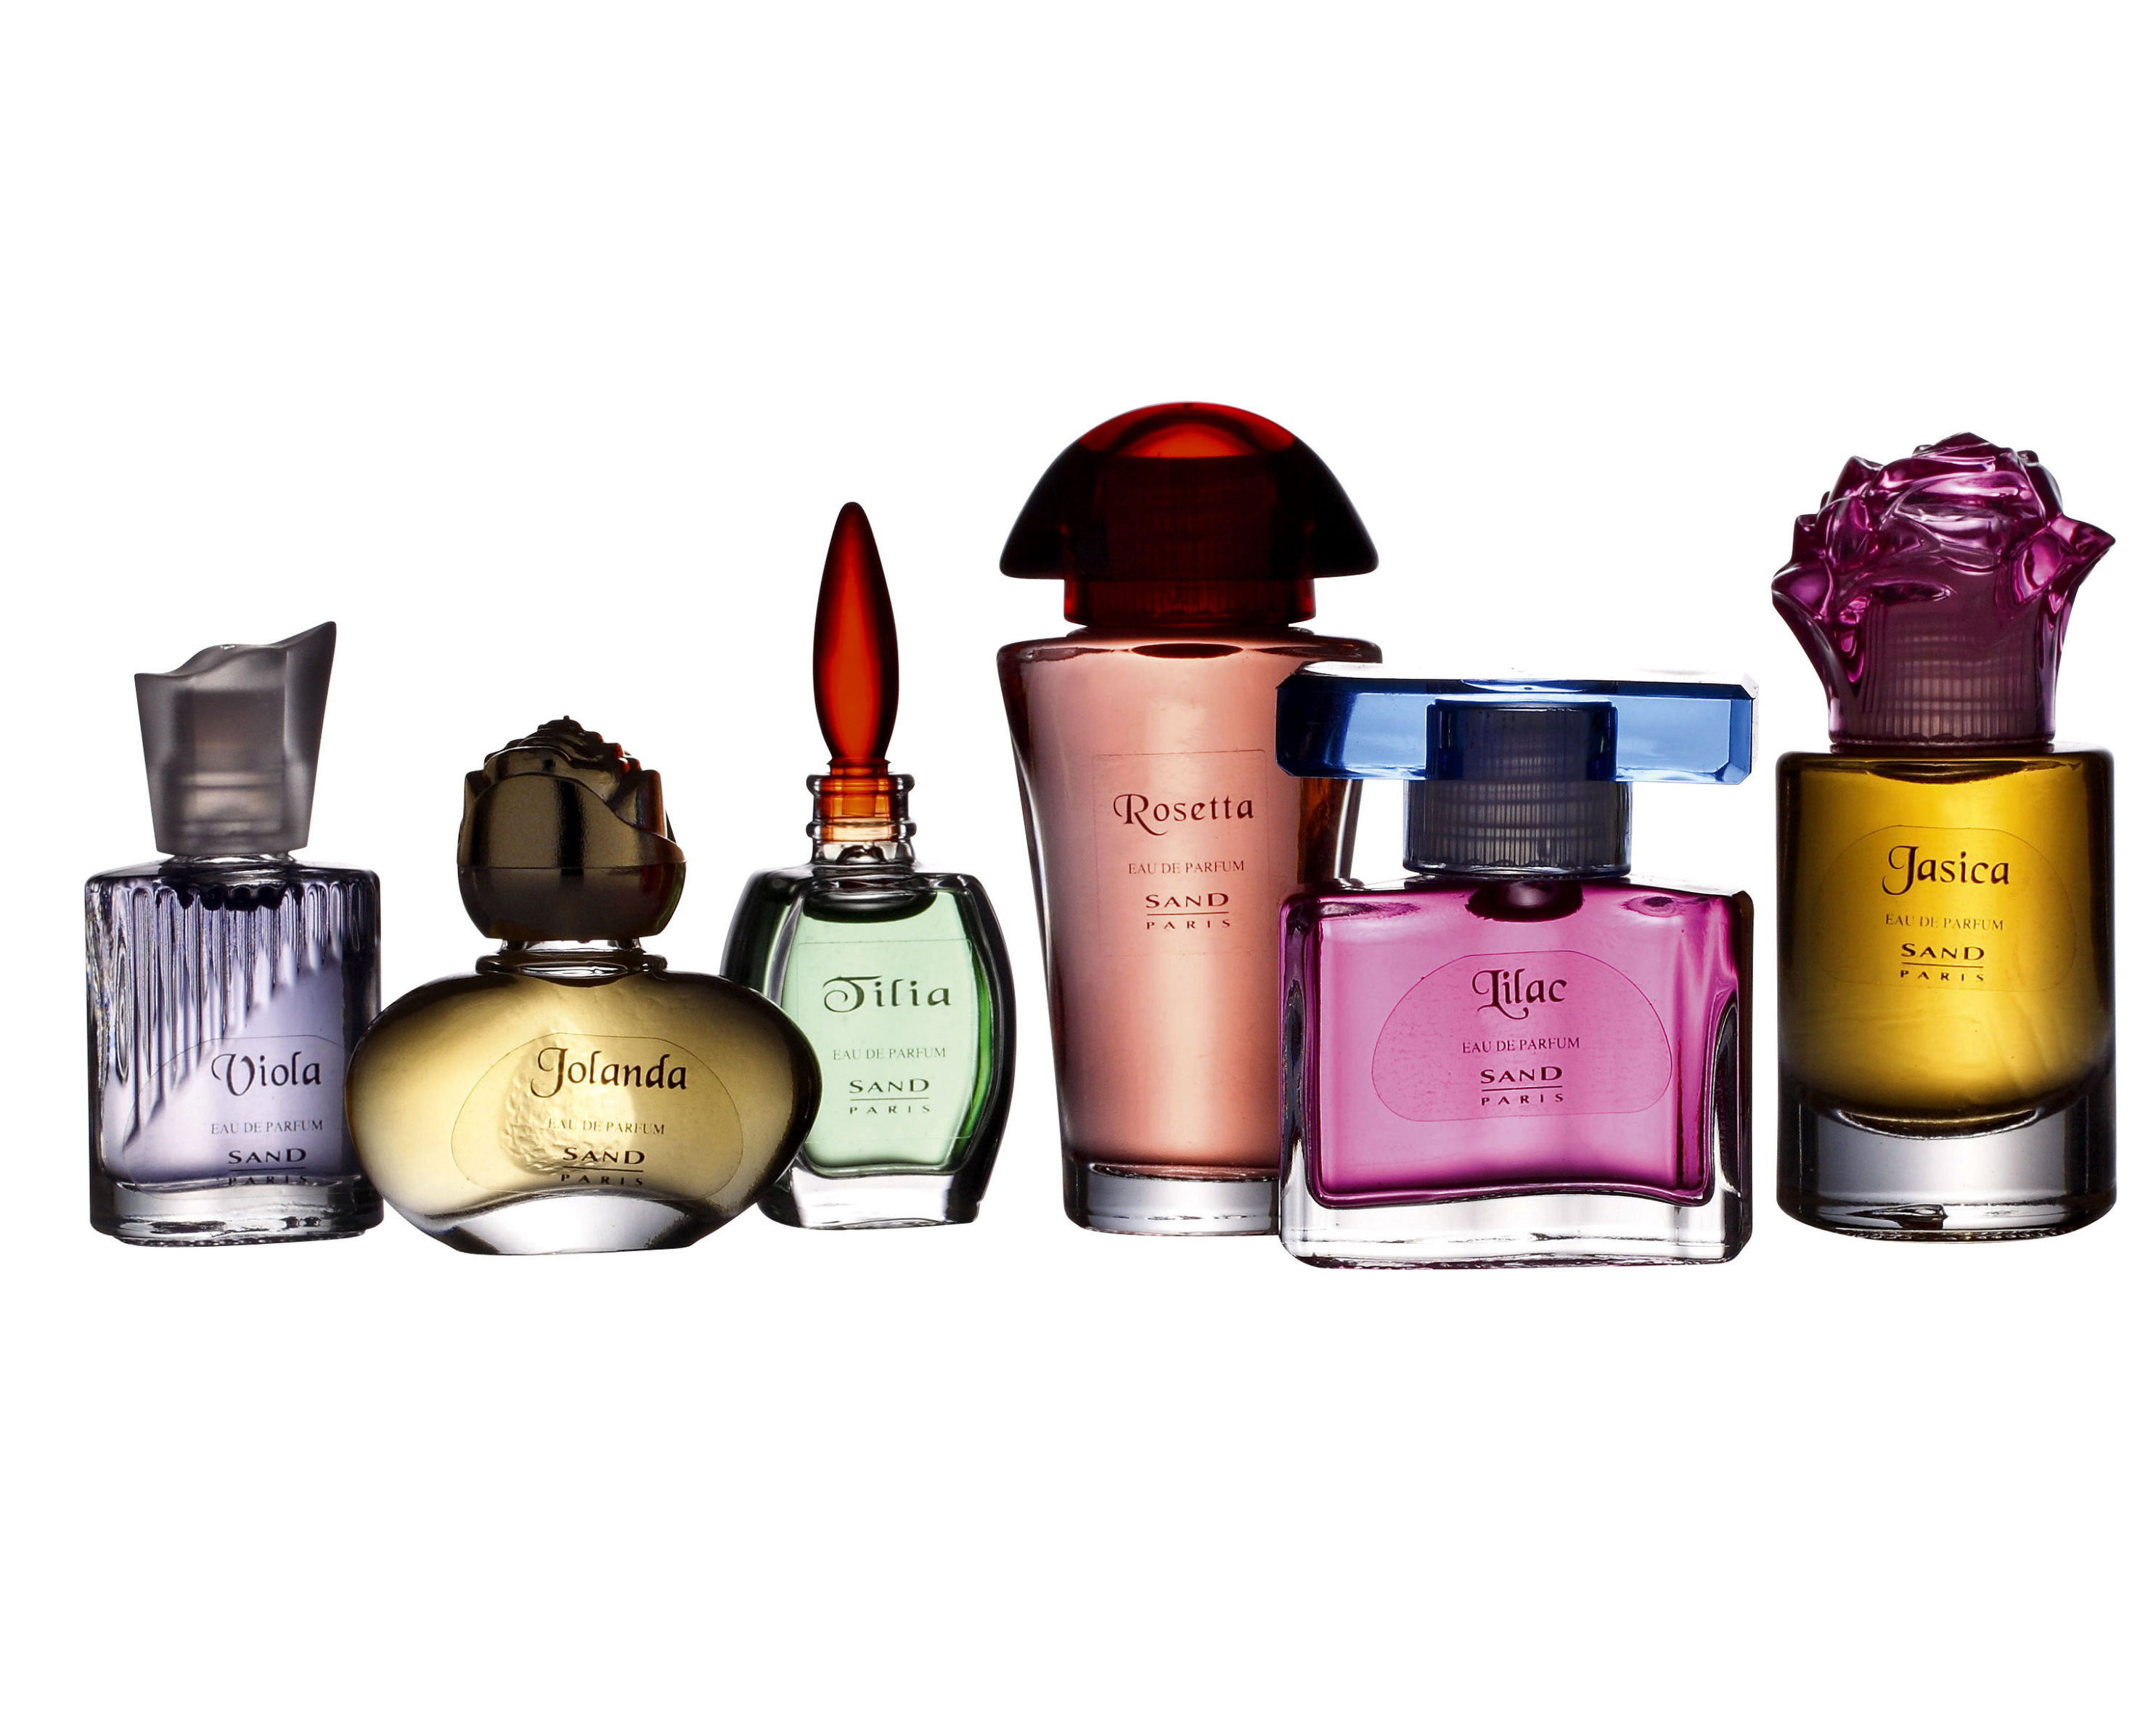 Parfum de France Adventskalender jetzt bei Weltbild.de bestellen